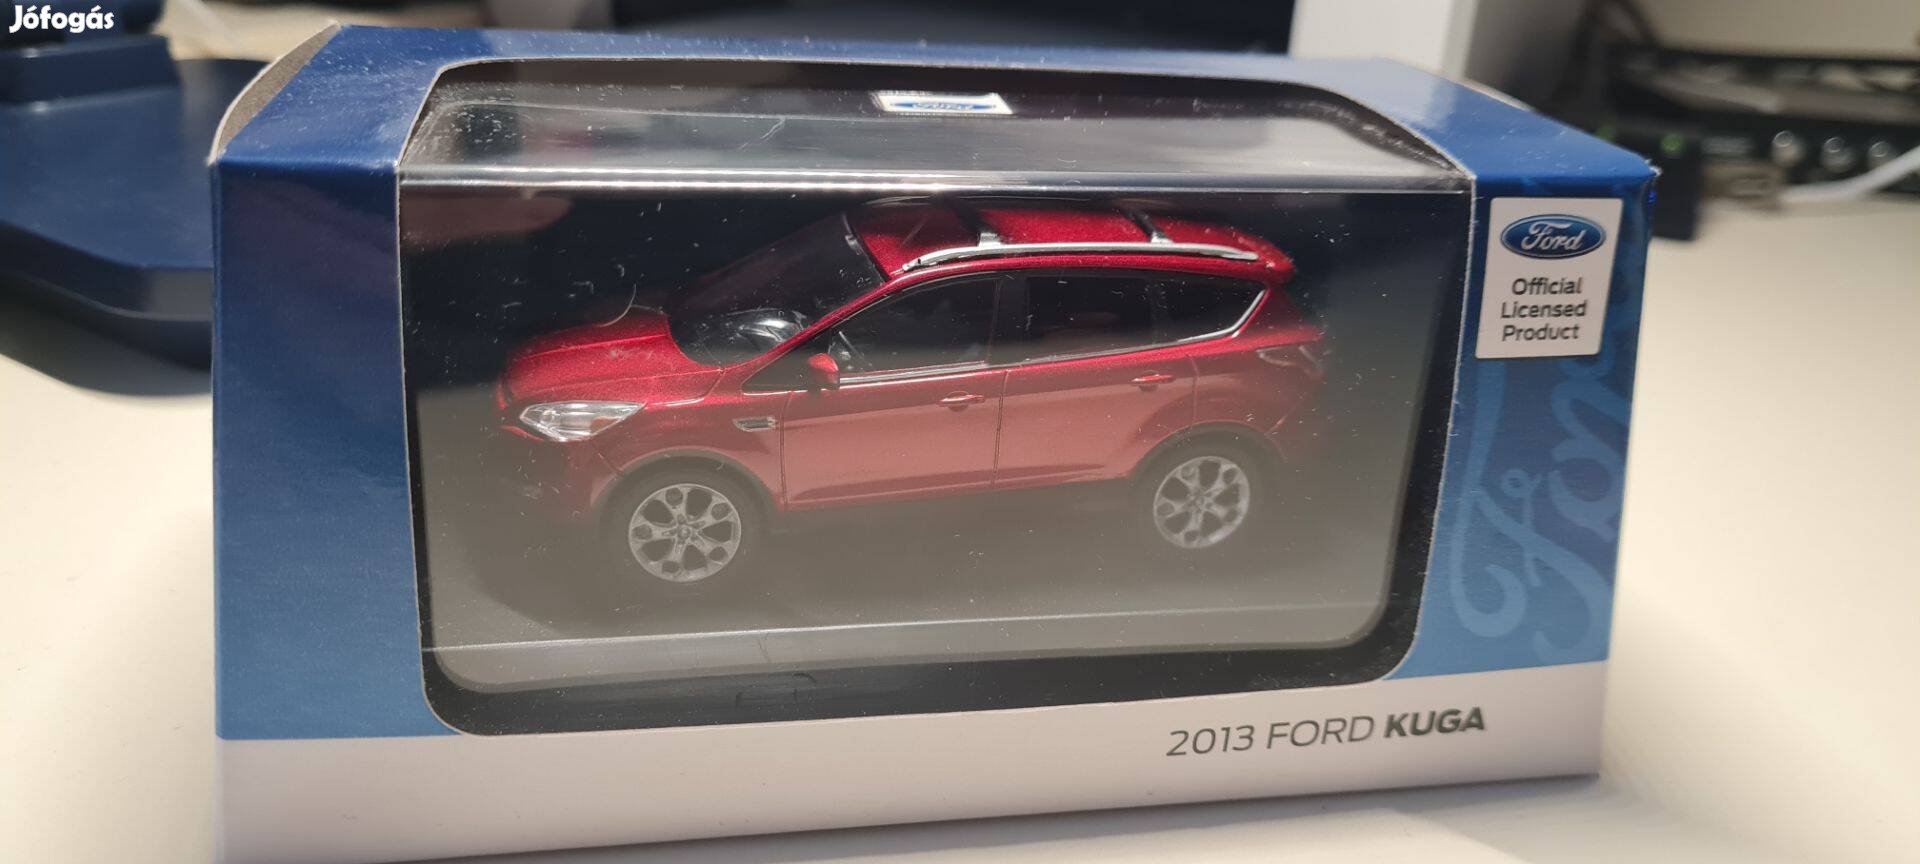 Greenlight - Ford England - Kuga II 2013 makett dobozában